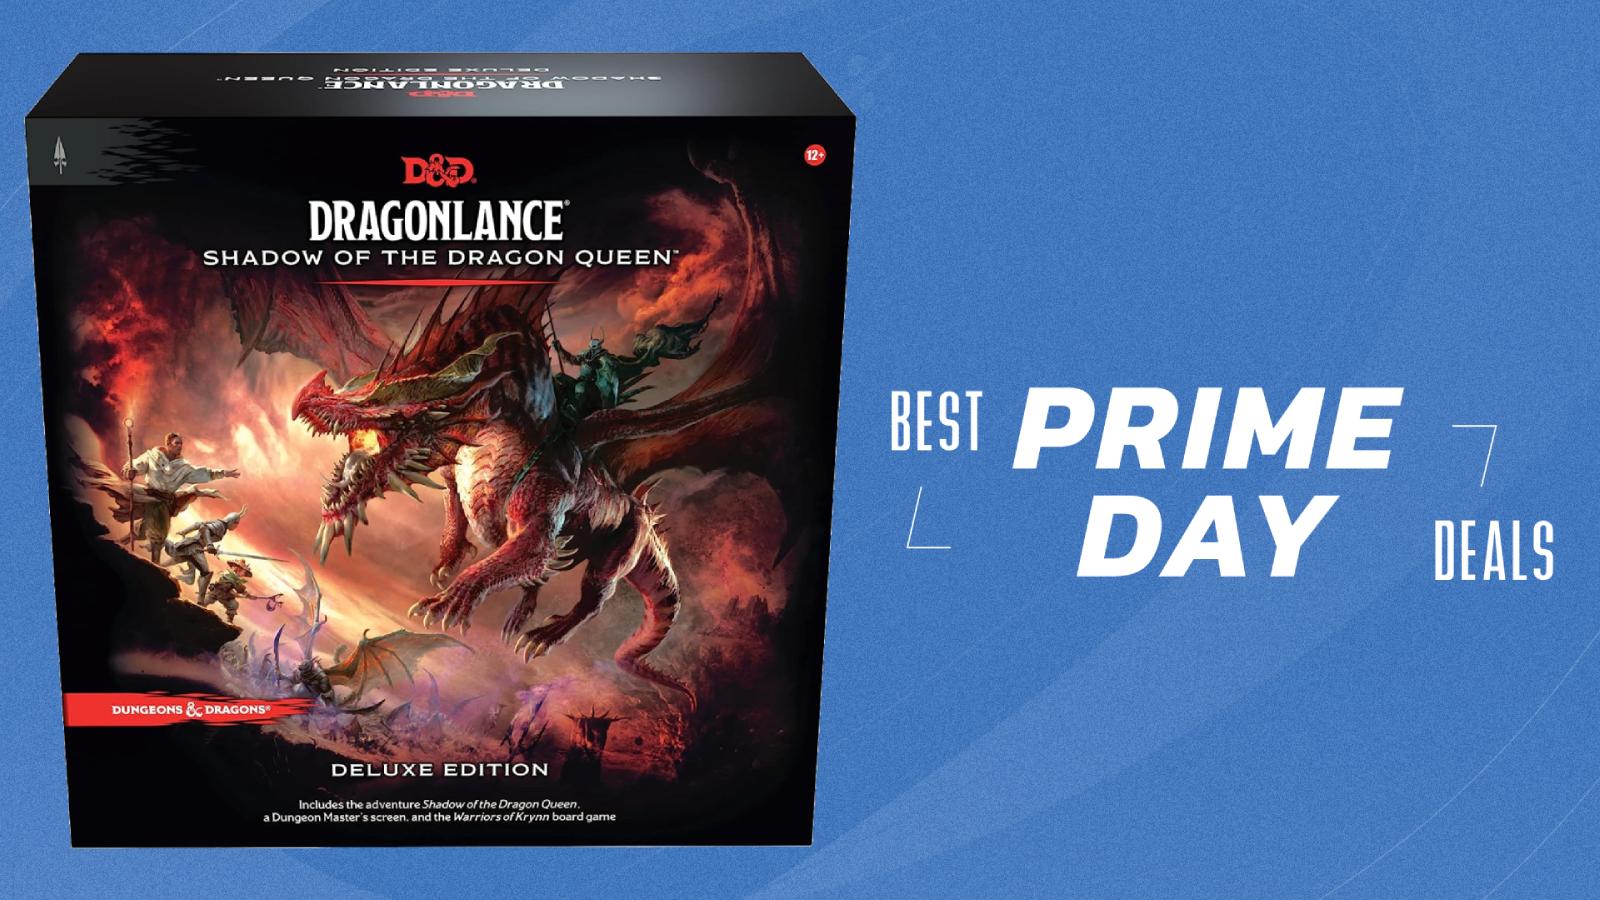 Dragonlance set on Prime Day Background